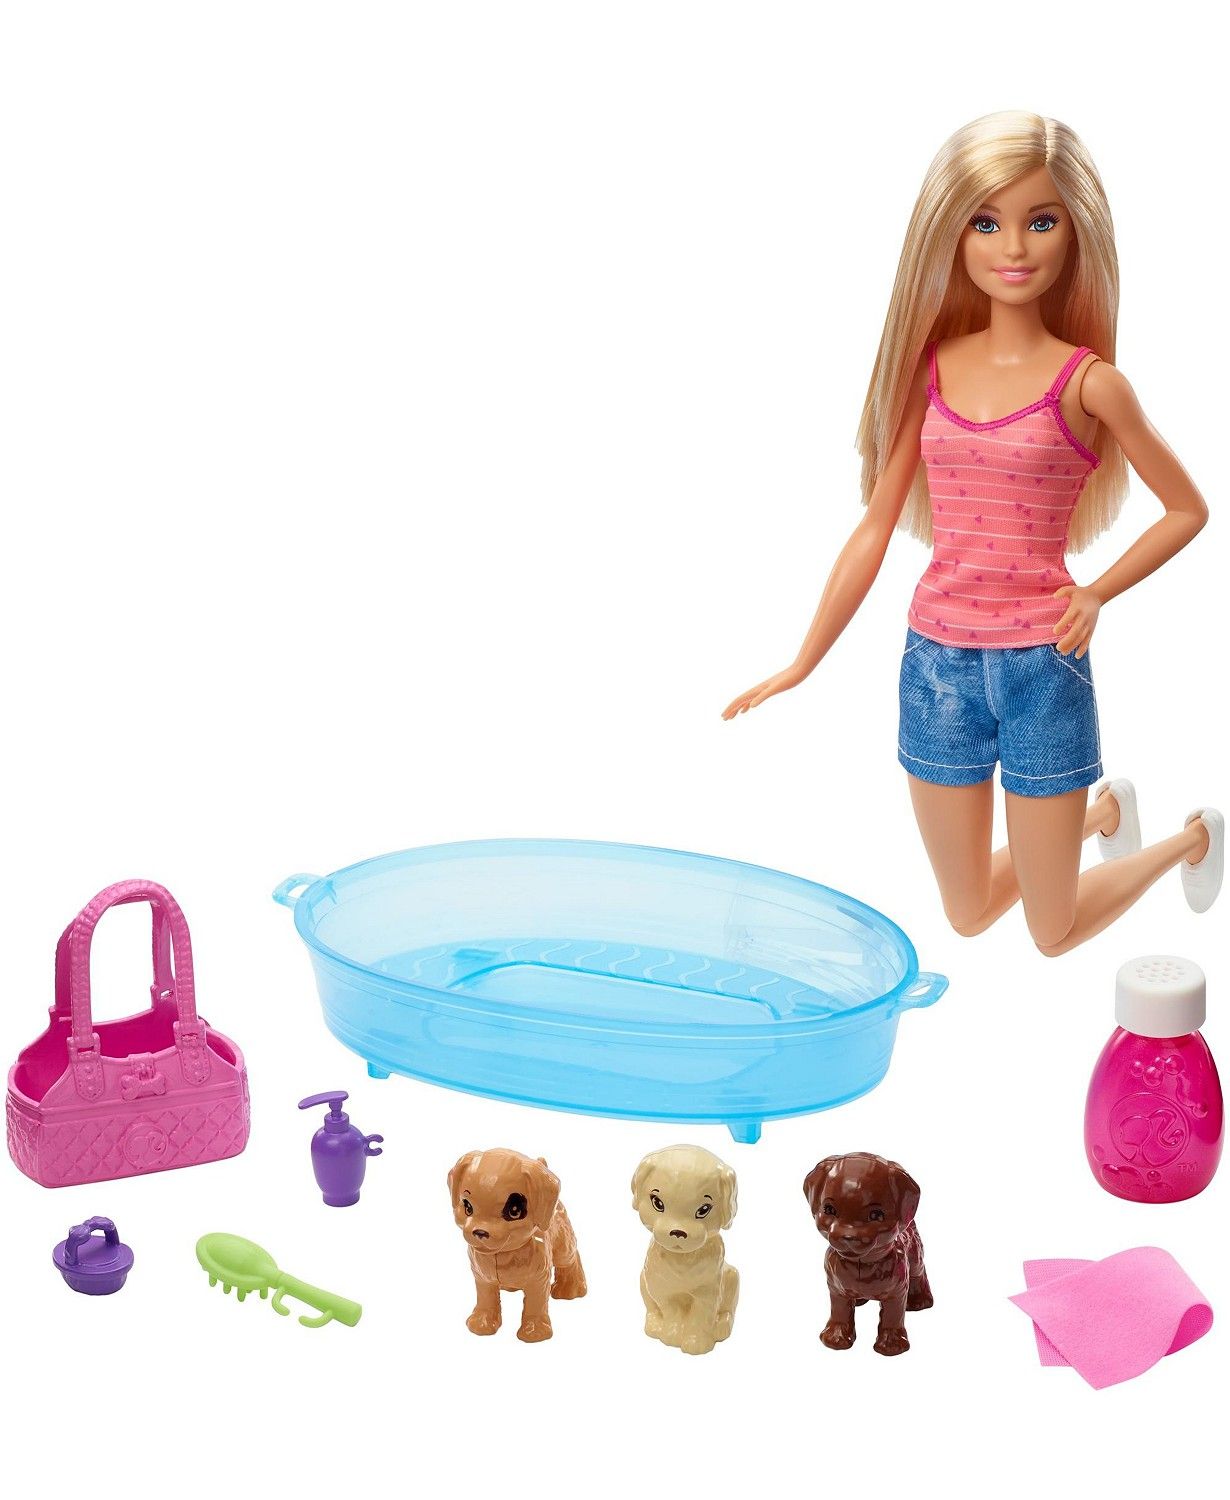 Barbie Doll & Accessories & Reviews - Home - Macy's | Macys (US)